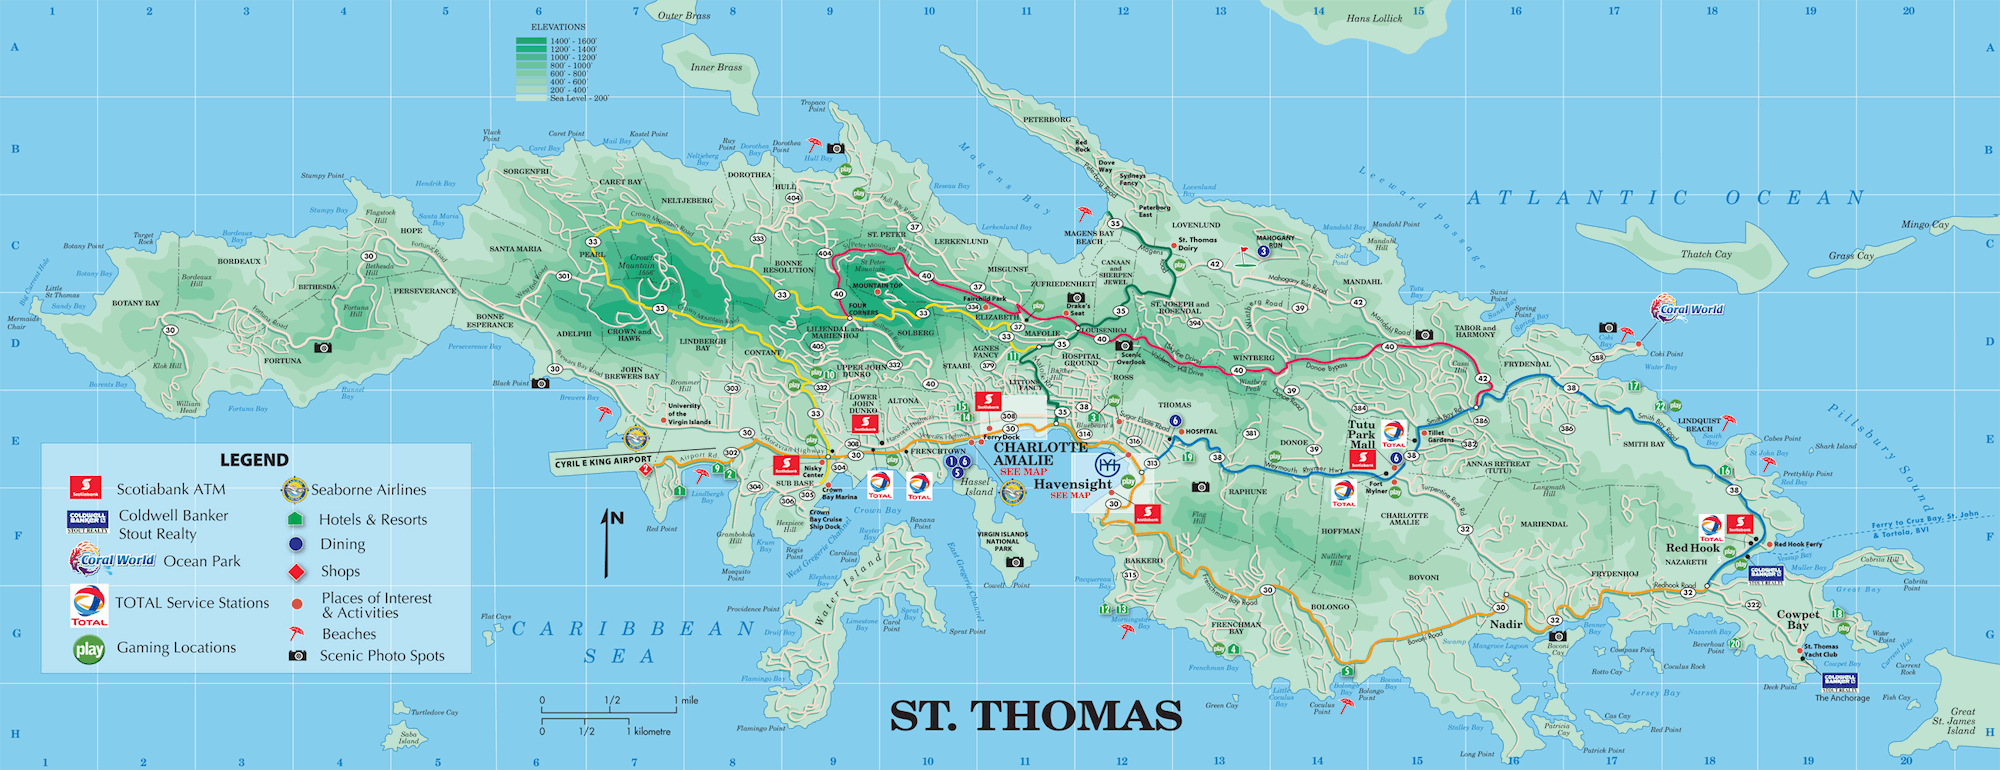 st thomas map us virgin islands